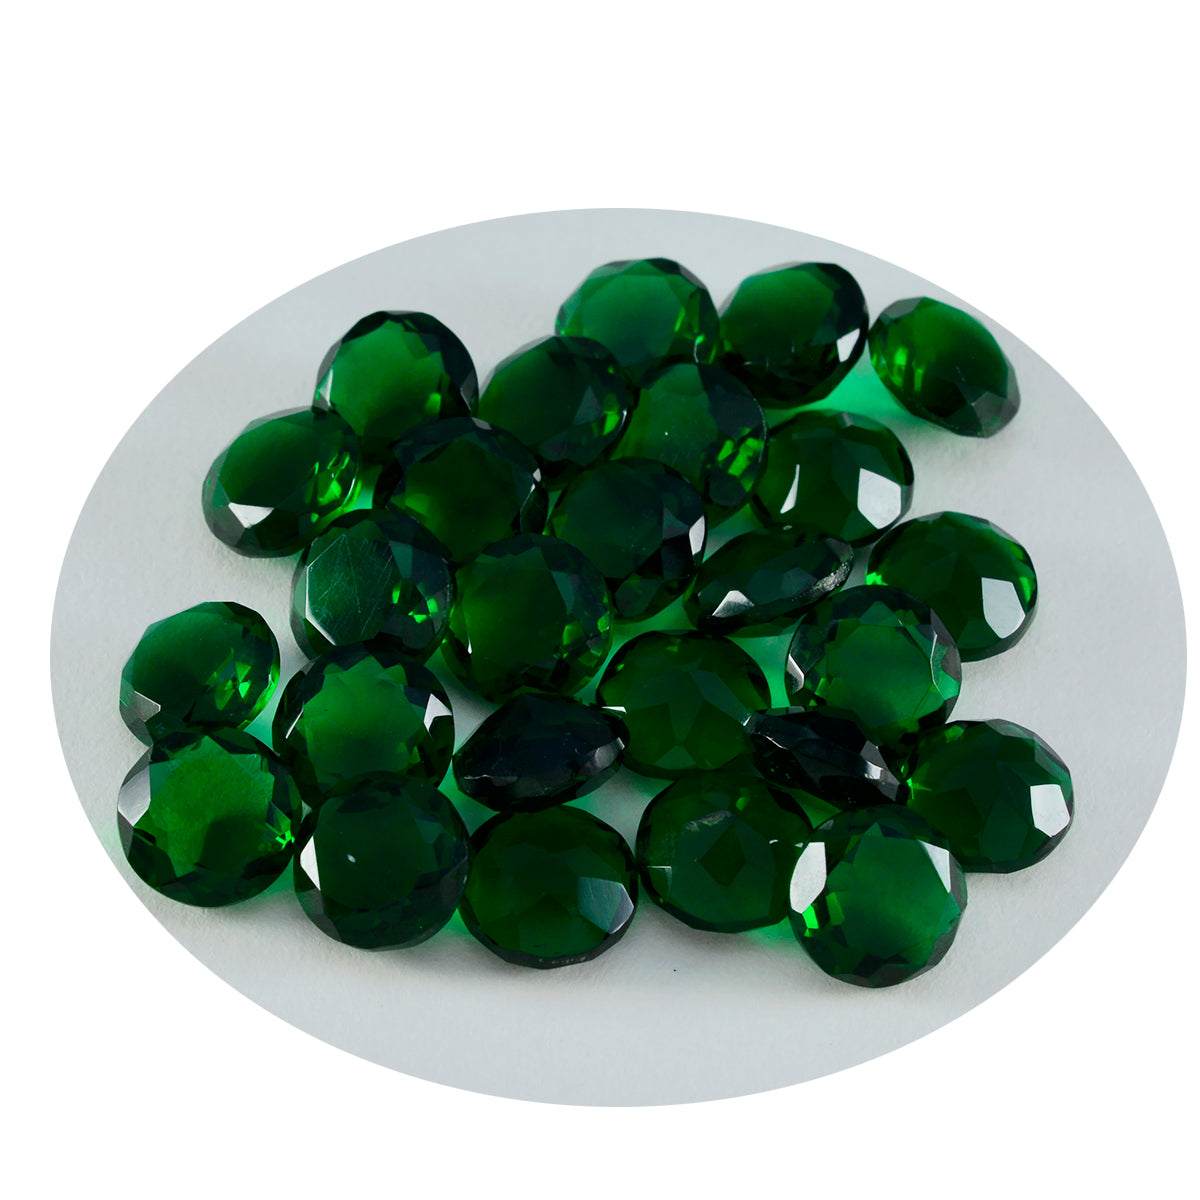 riyogems 1pc グリーン エメラルド CZ ファセット 5x5 mm ラウンド形状かわいい品質の宝石